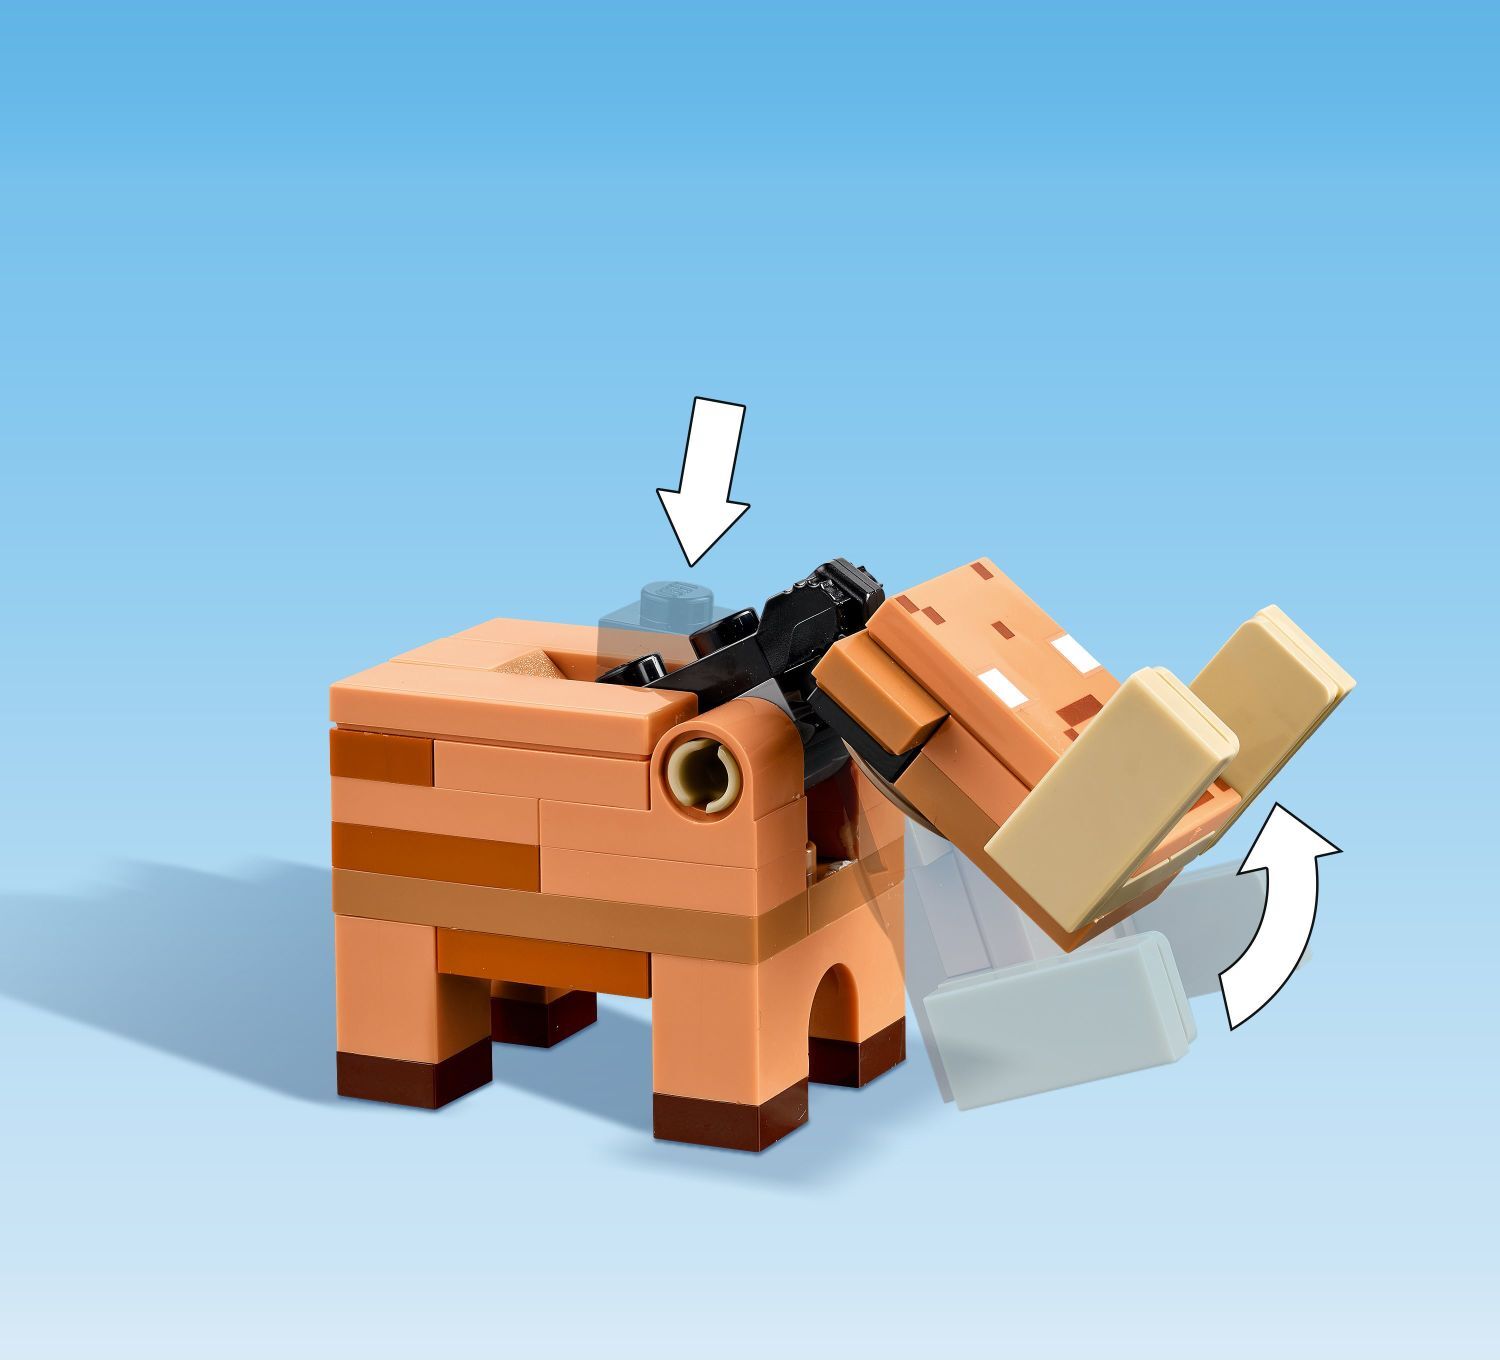 LEGO Minecraft: The Nether Portal Ambush